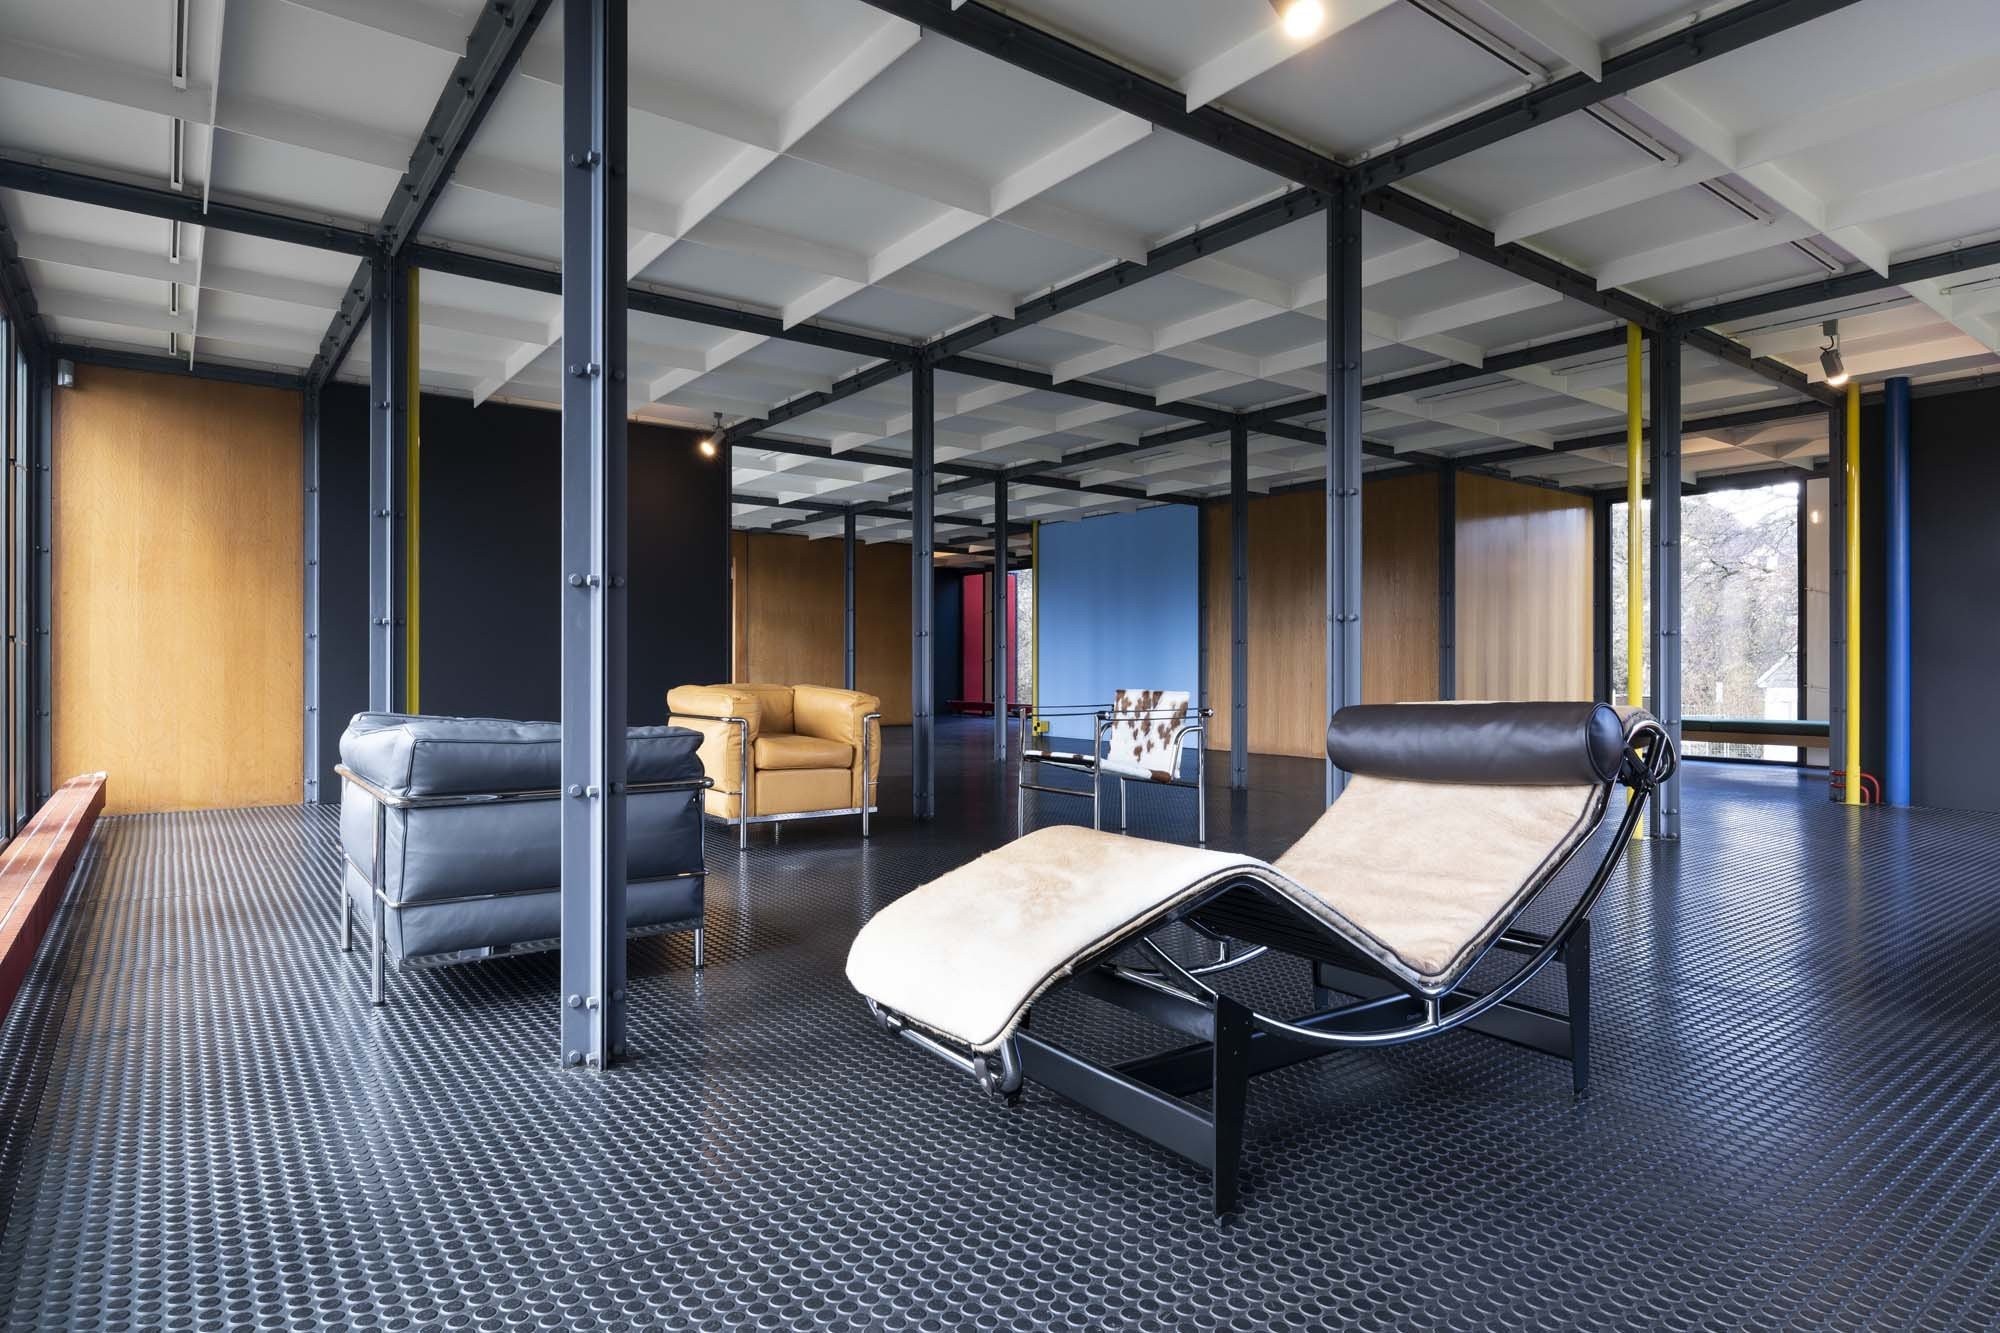 lounge-area-on-2nd-floor-pavillon-le-corbusier-2018-zurich-8ihsr.jpg